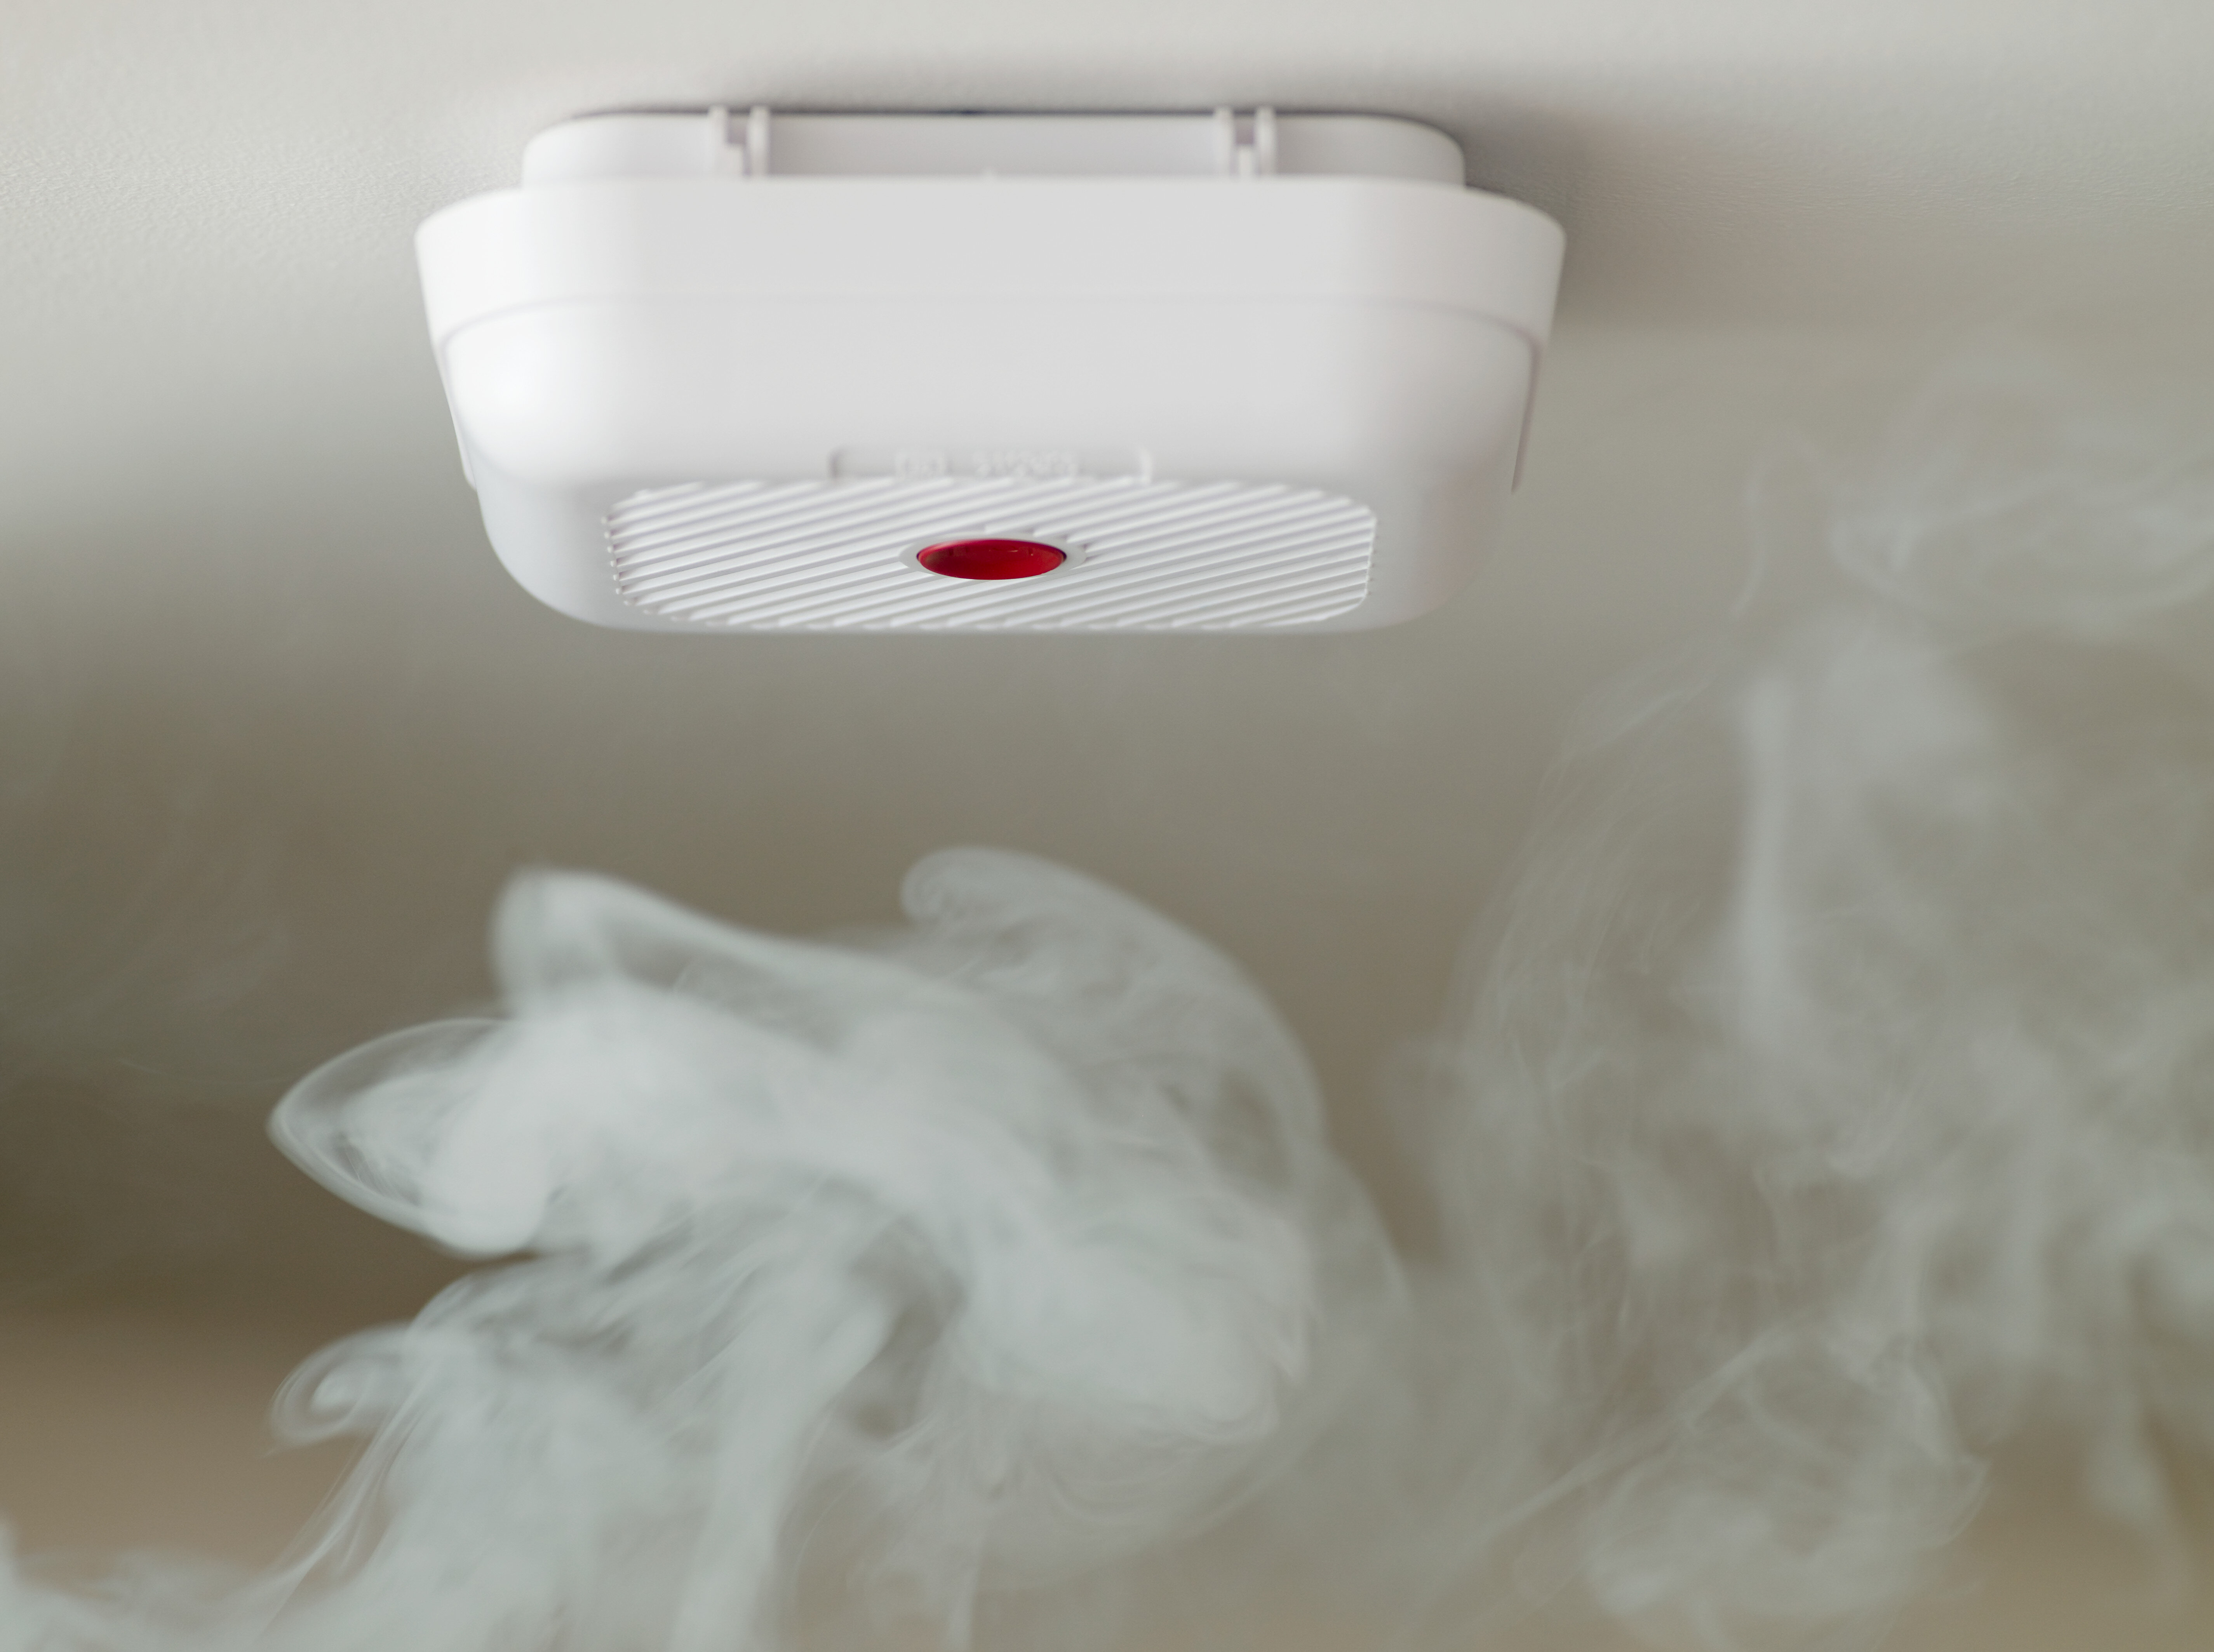 Smoke rising towards a ceiling-mounted smoke detector